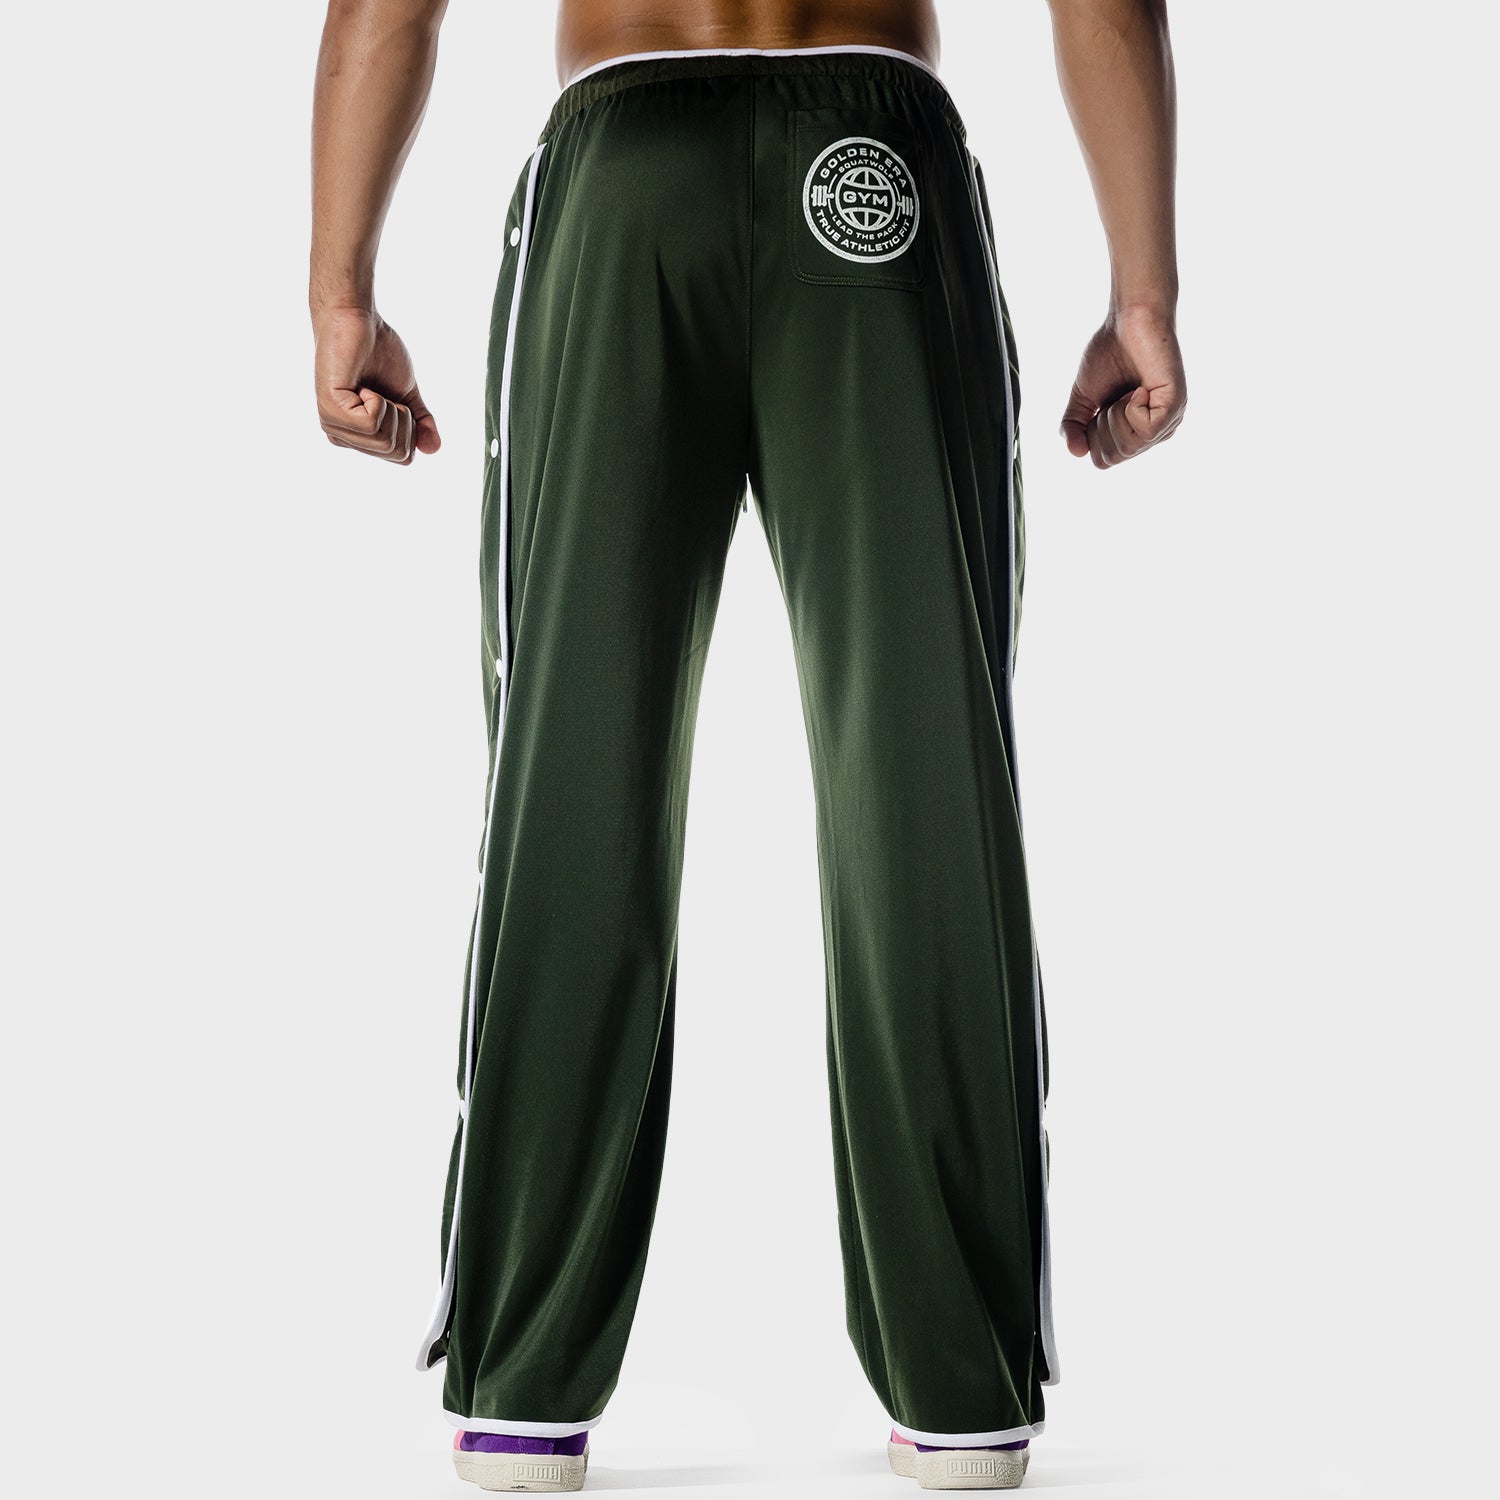 squatwolf-gym-pants-golden-era-track-pants-kombu-green-workout-clothes-for-men